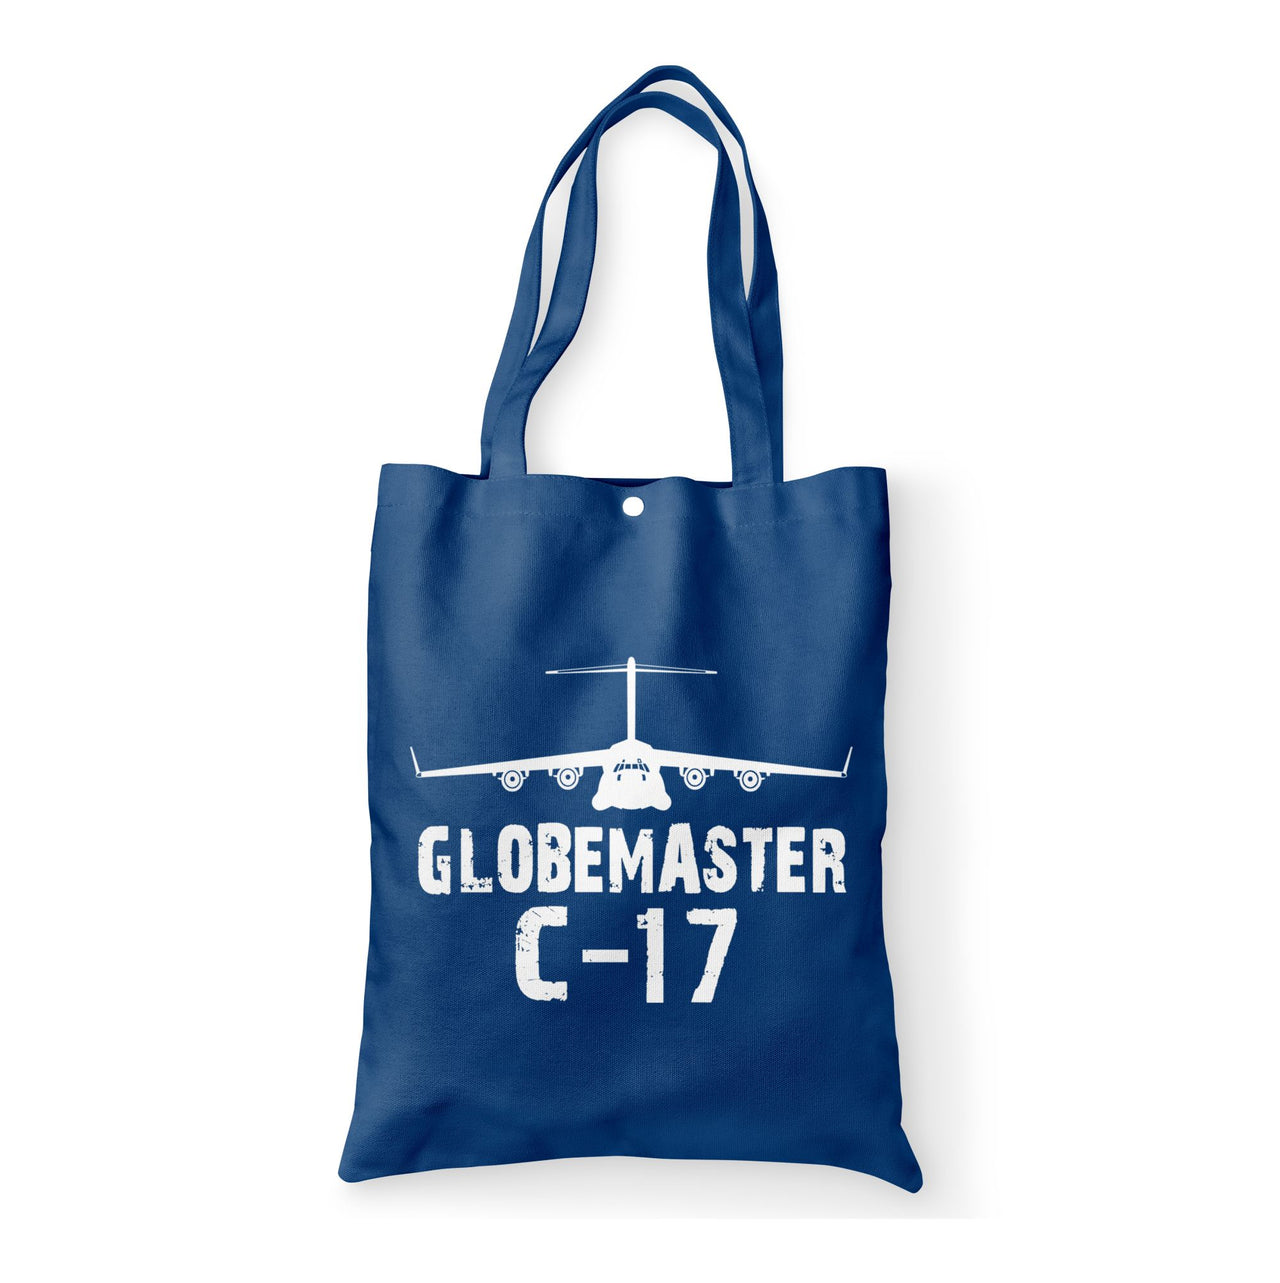 GlobeMaster C-17 & Plane Designed Tote Bags